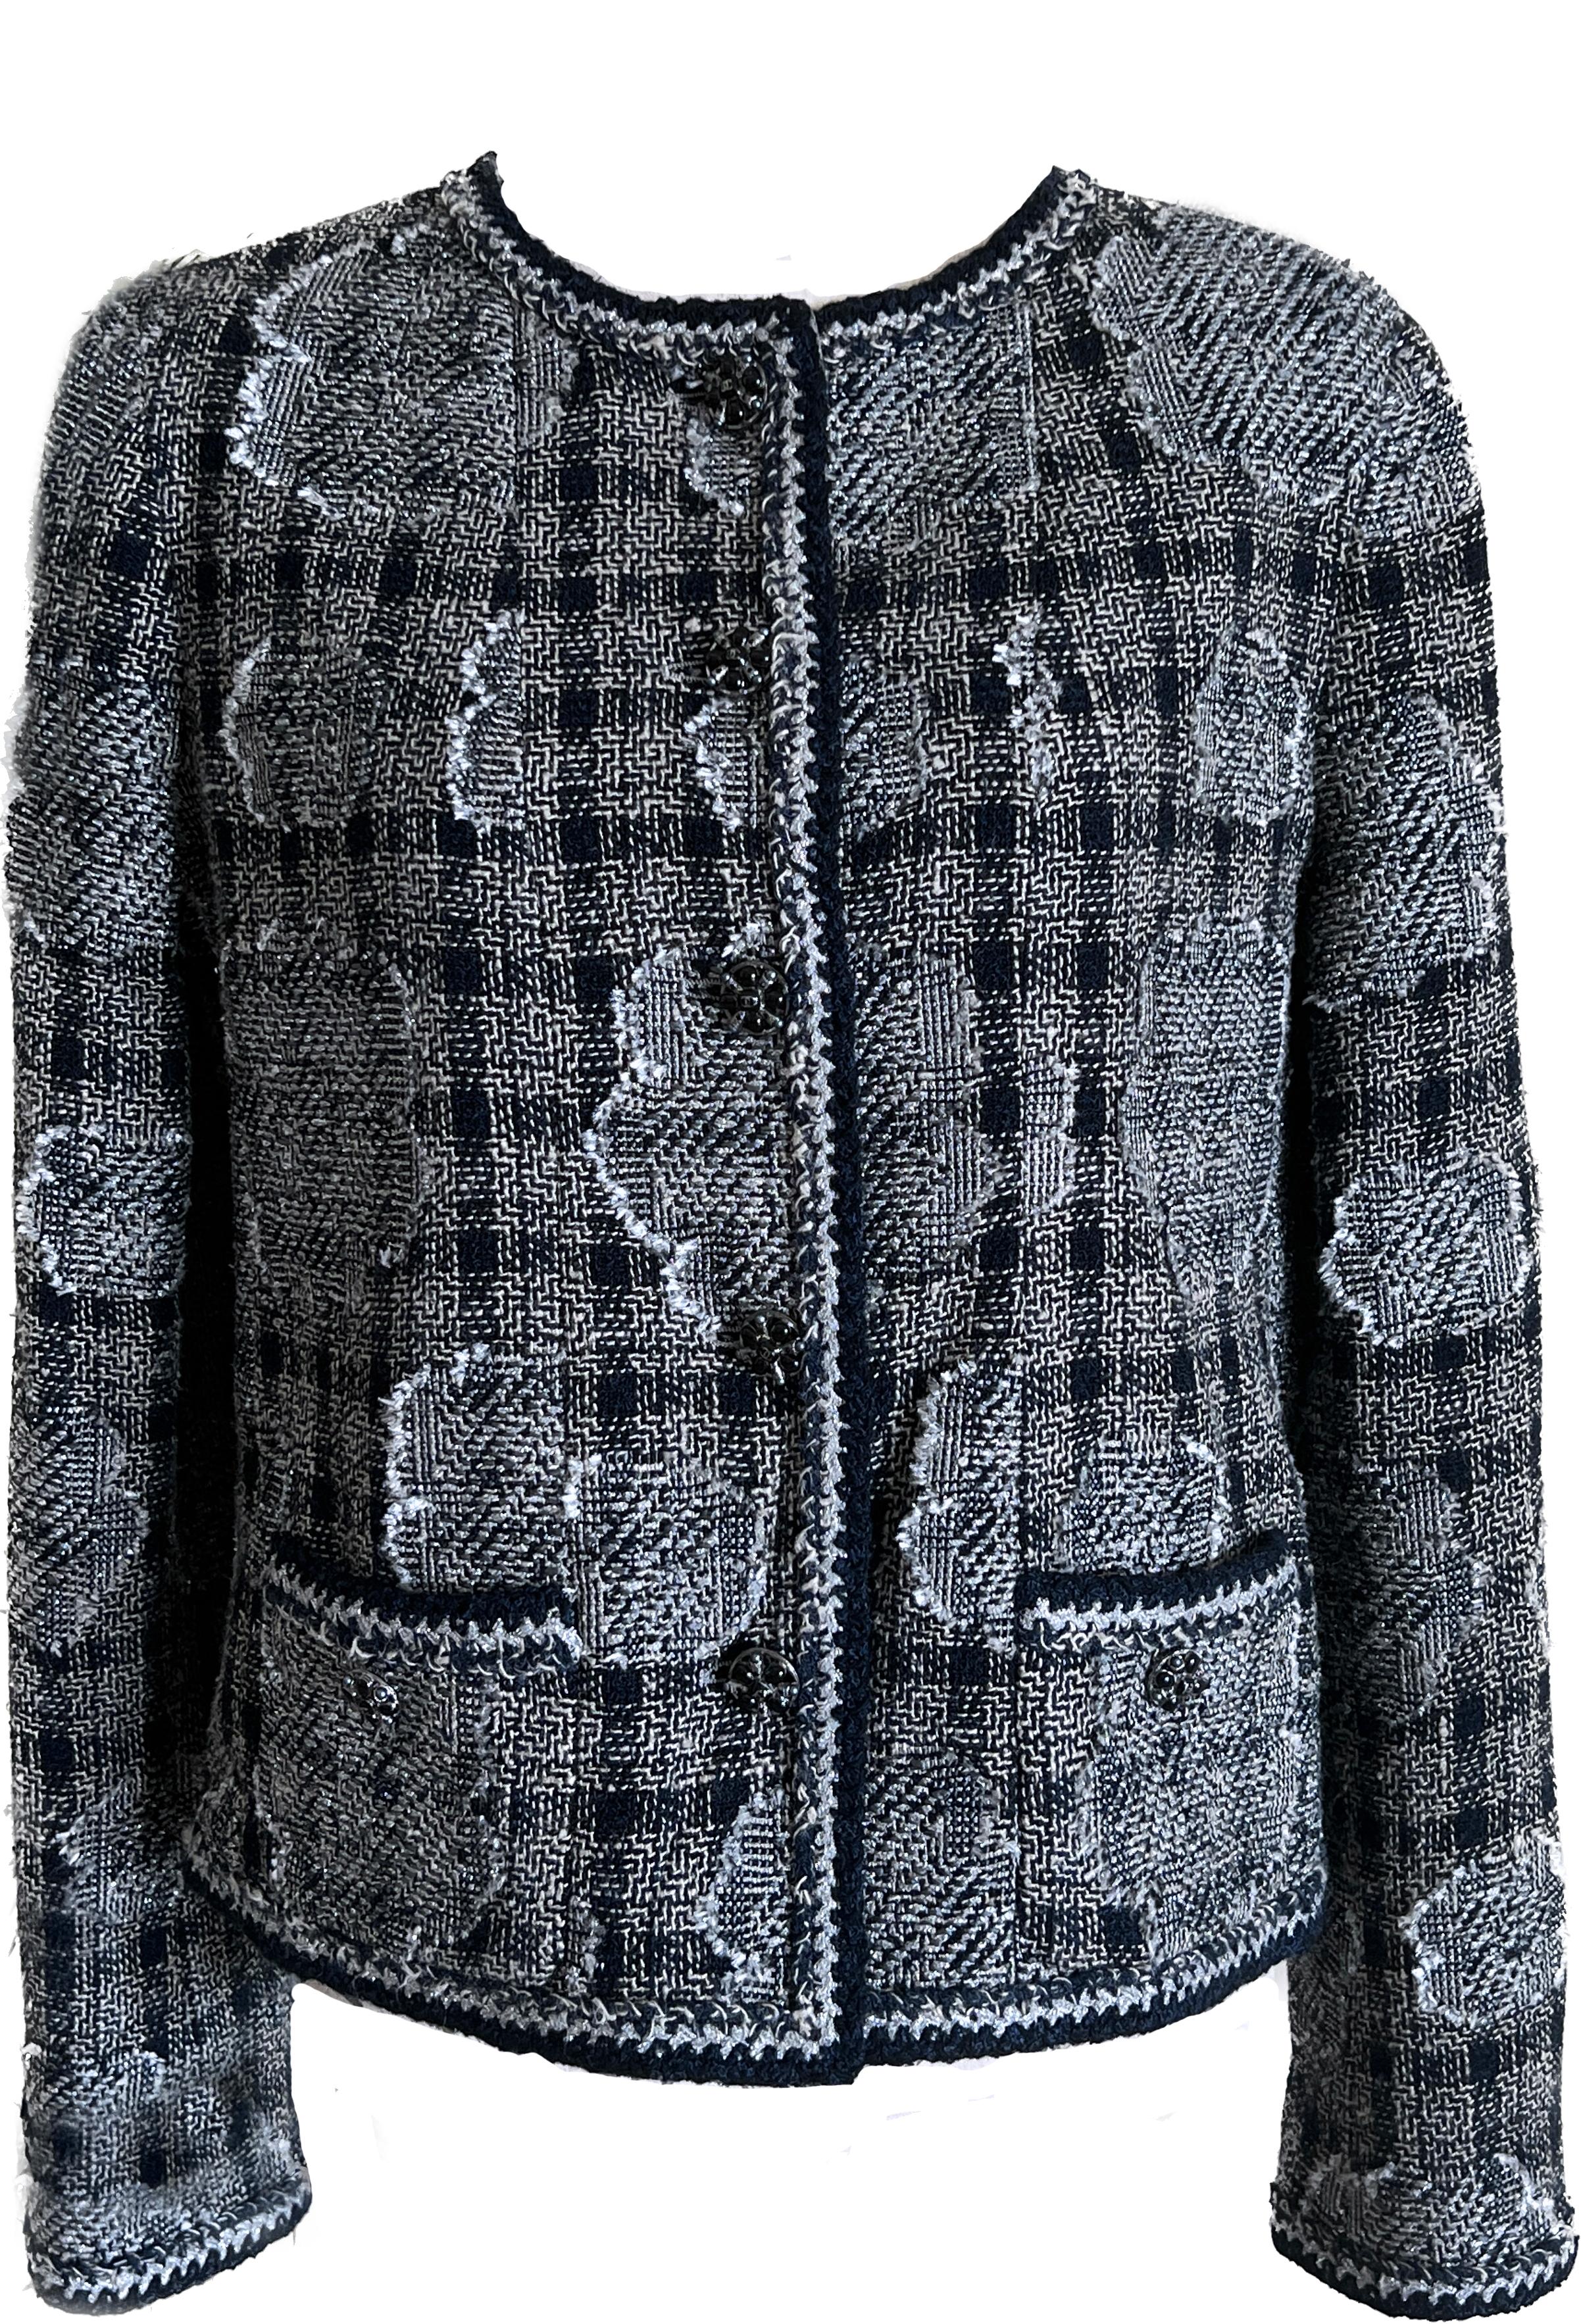 Chanel Vintage 2004 Blazer - Neutrals Jackets, Clothing - CHA930349